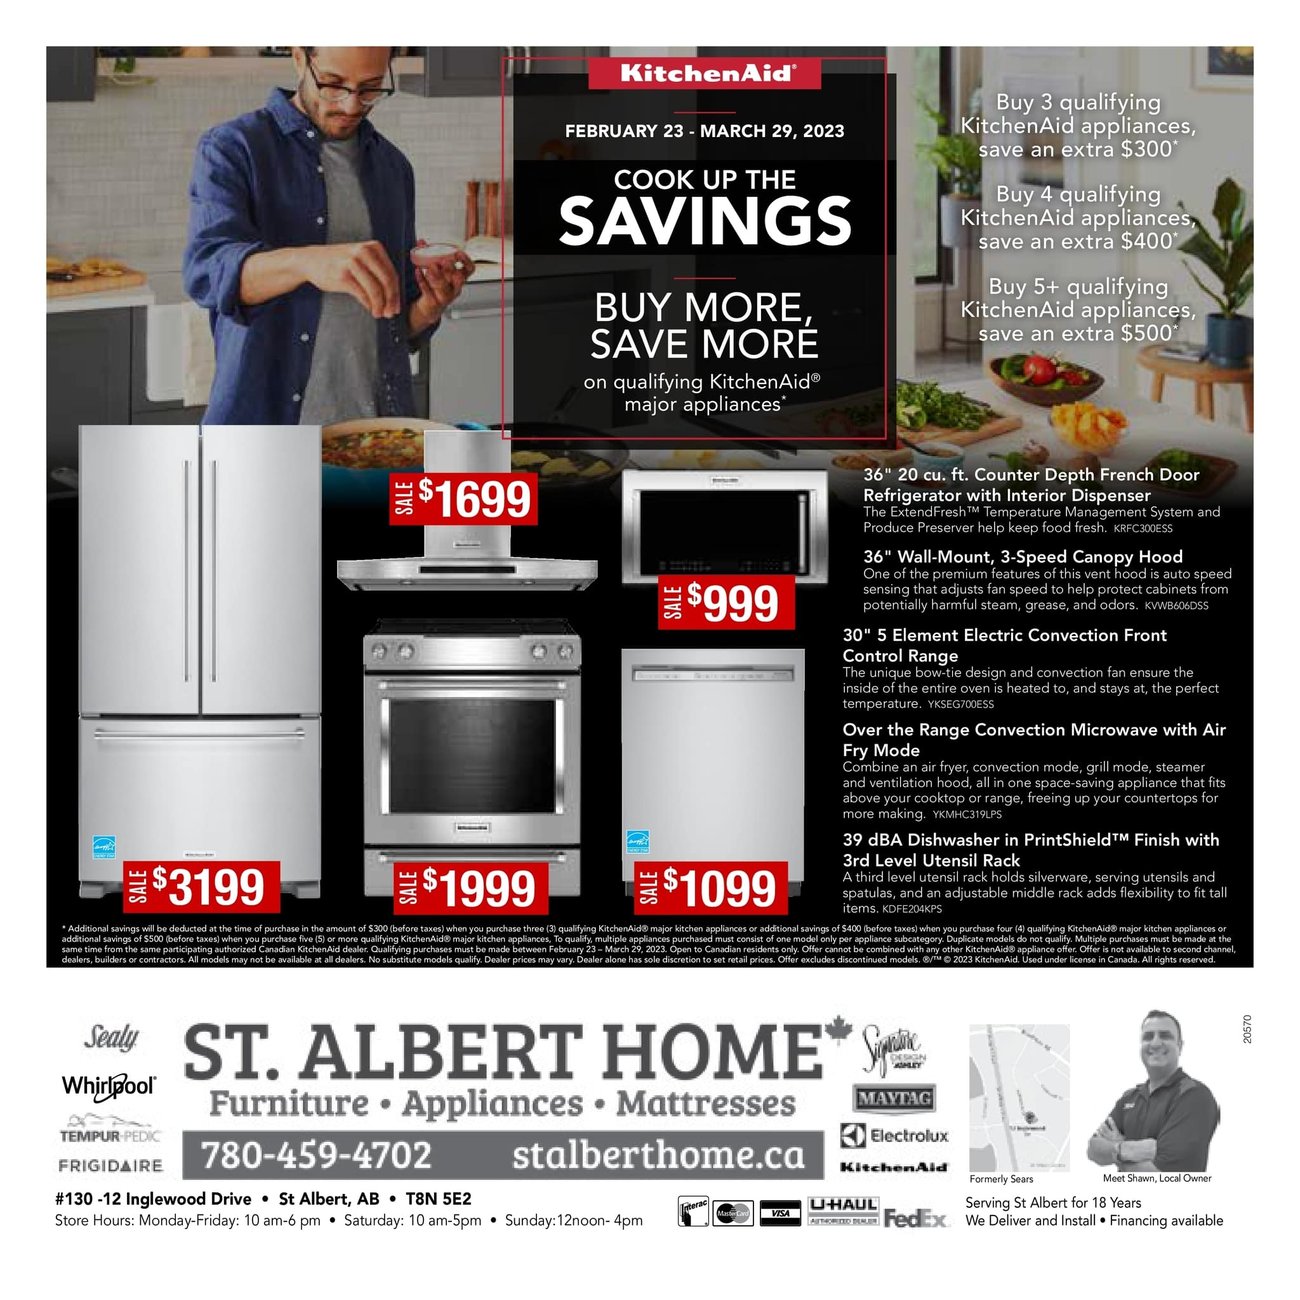 St. Albert Home - Maytag+KitchenAid Sale - Page 4